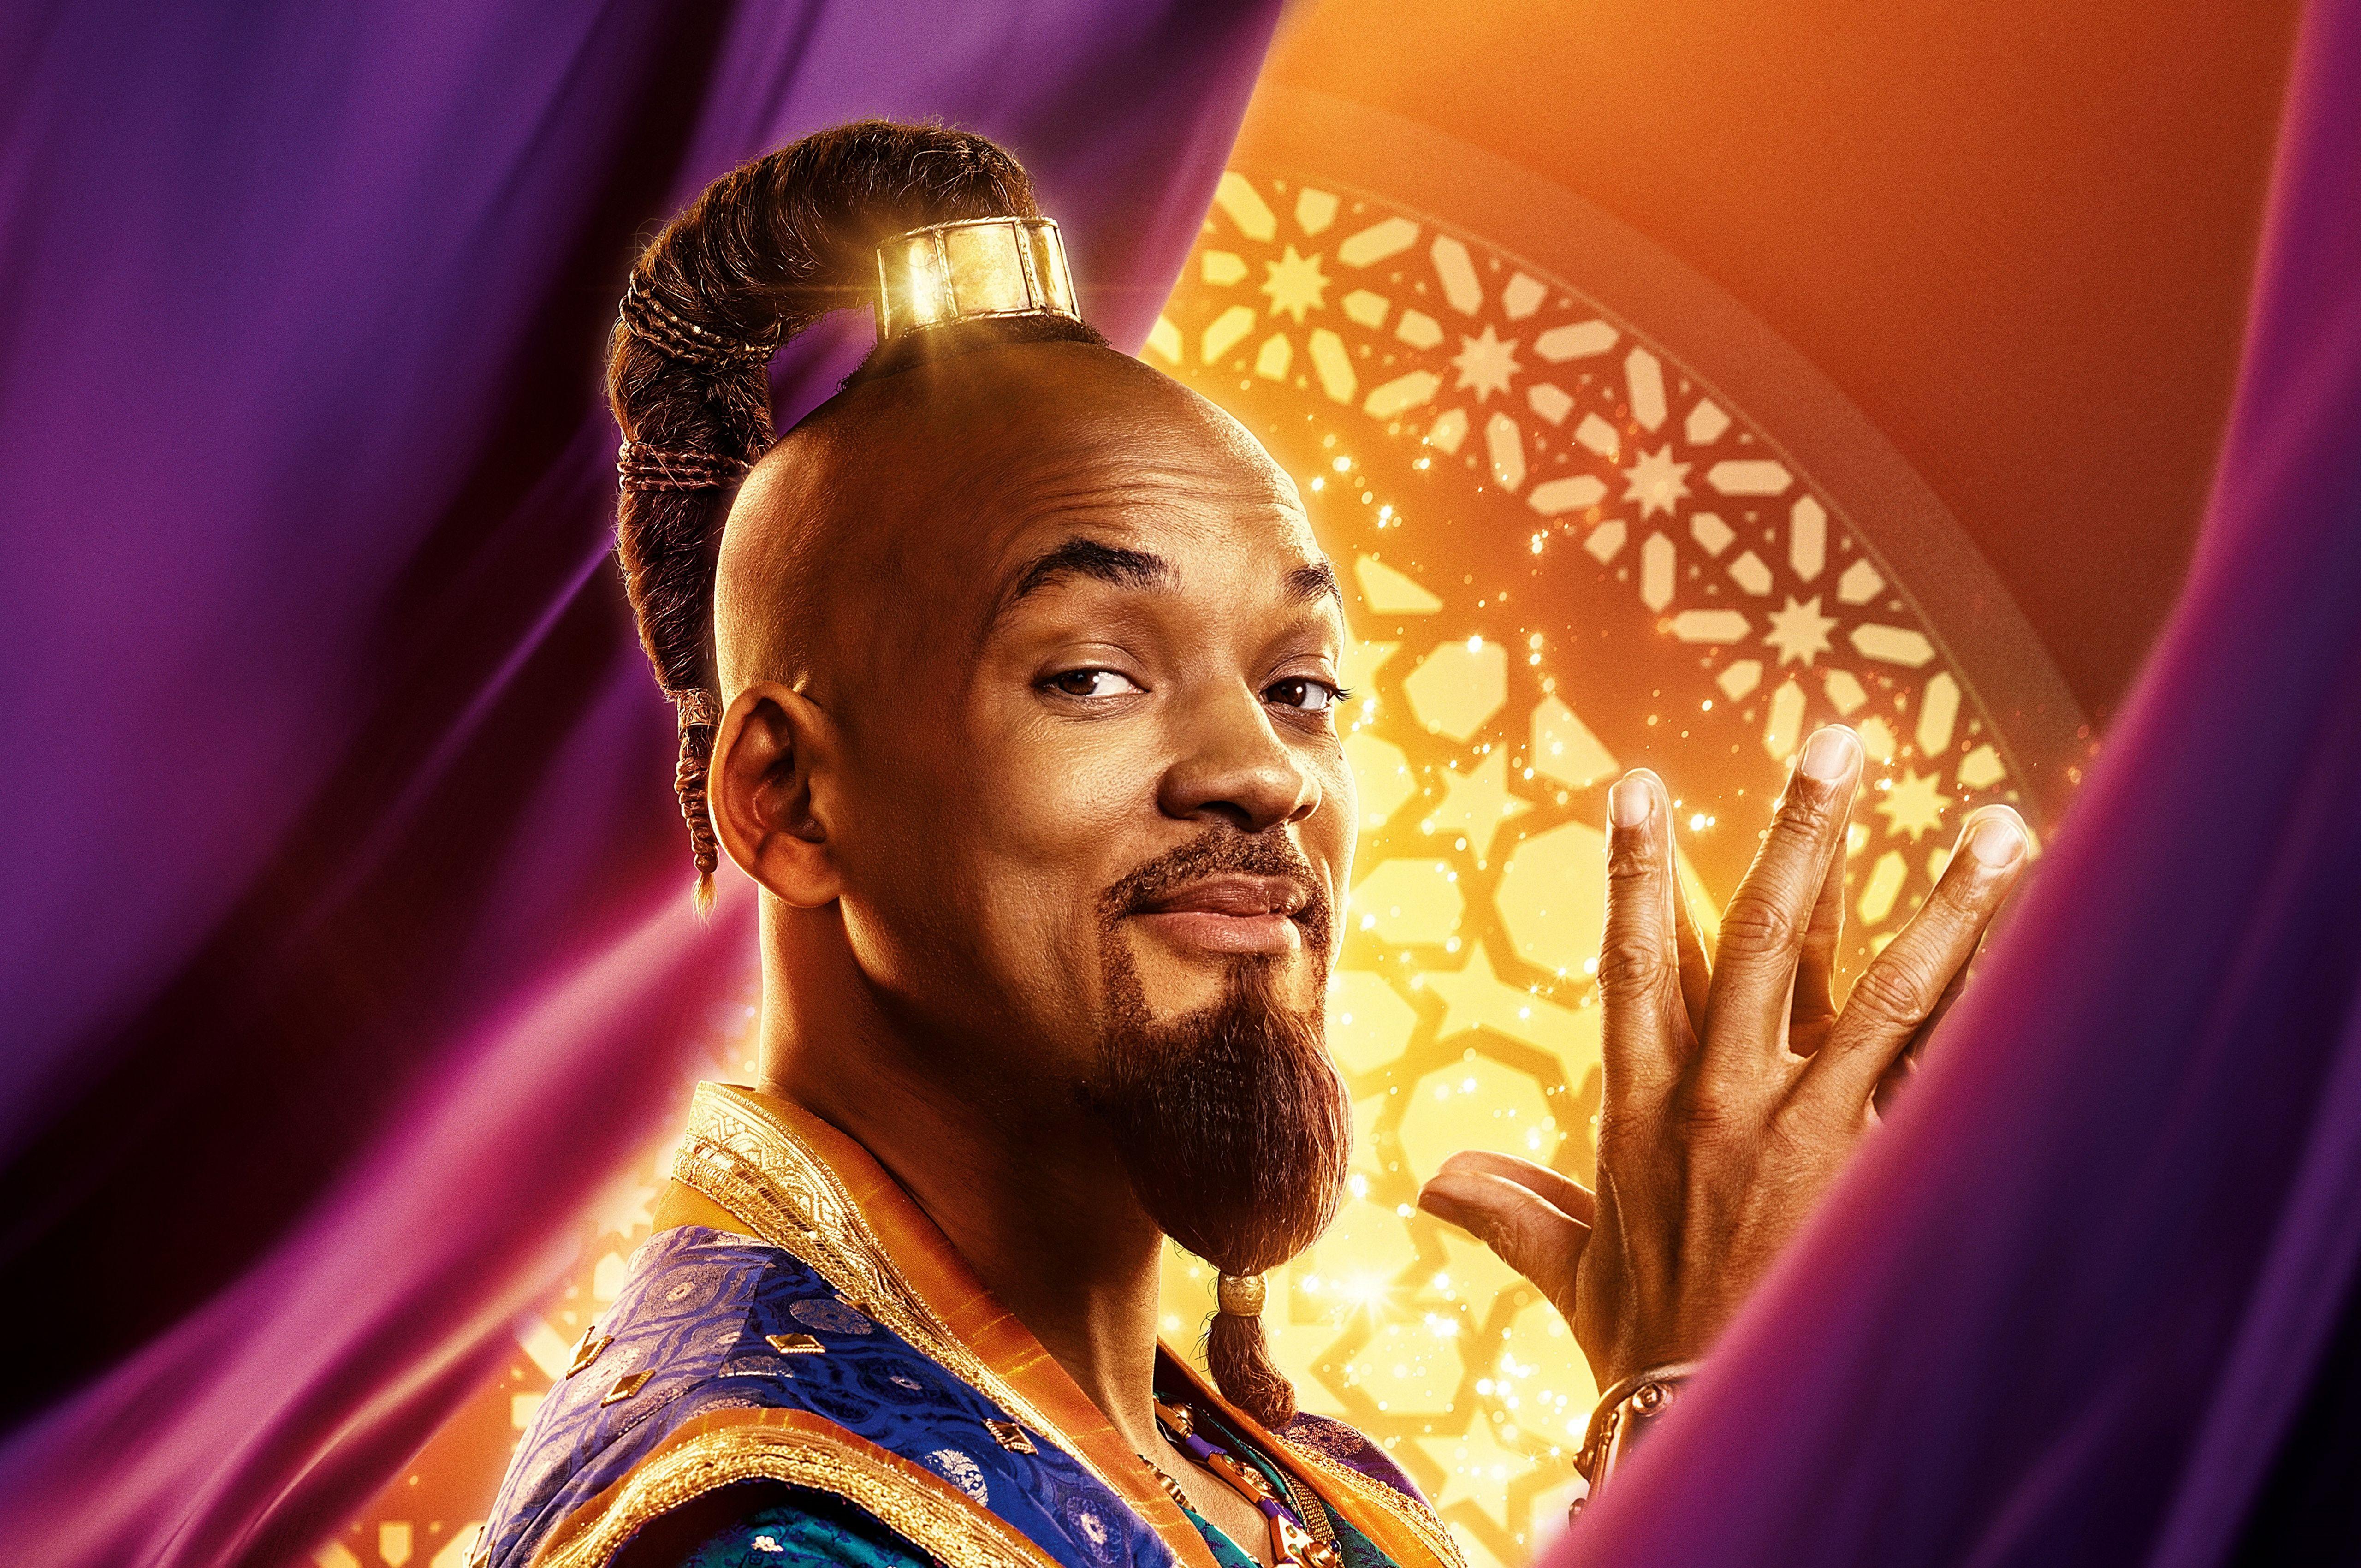 5k Background Will Smith Genie Aladdin 2019 Wallpaper and Free